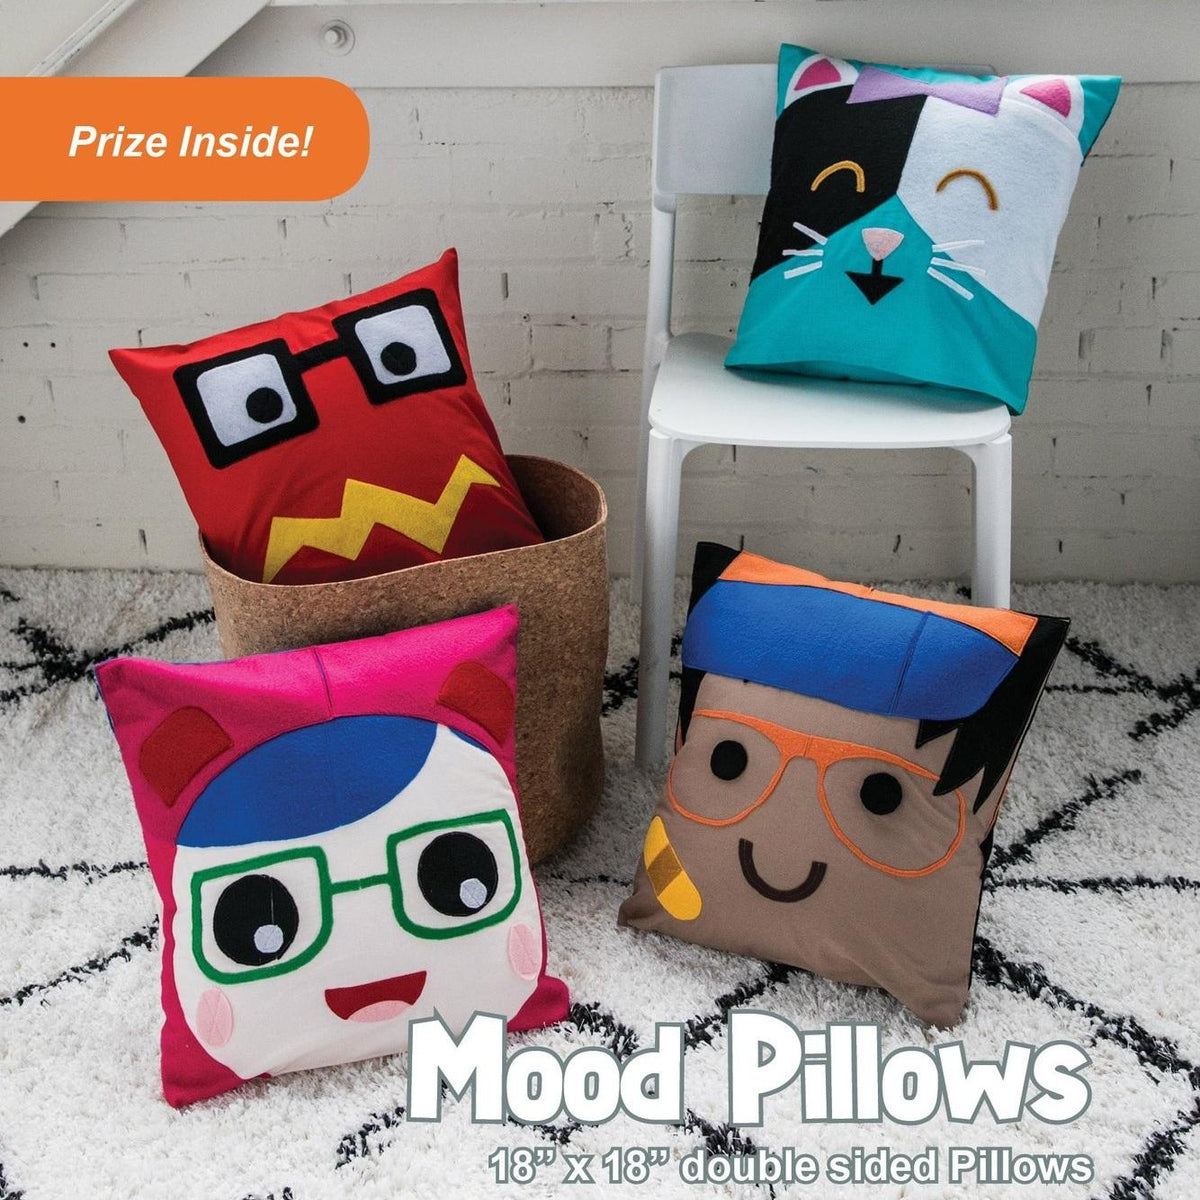 Mood Pillows